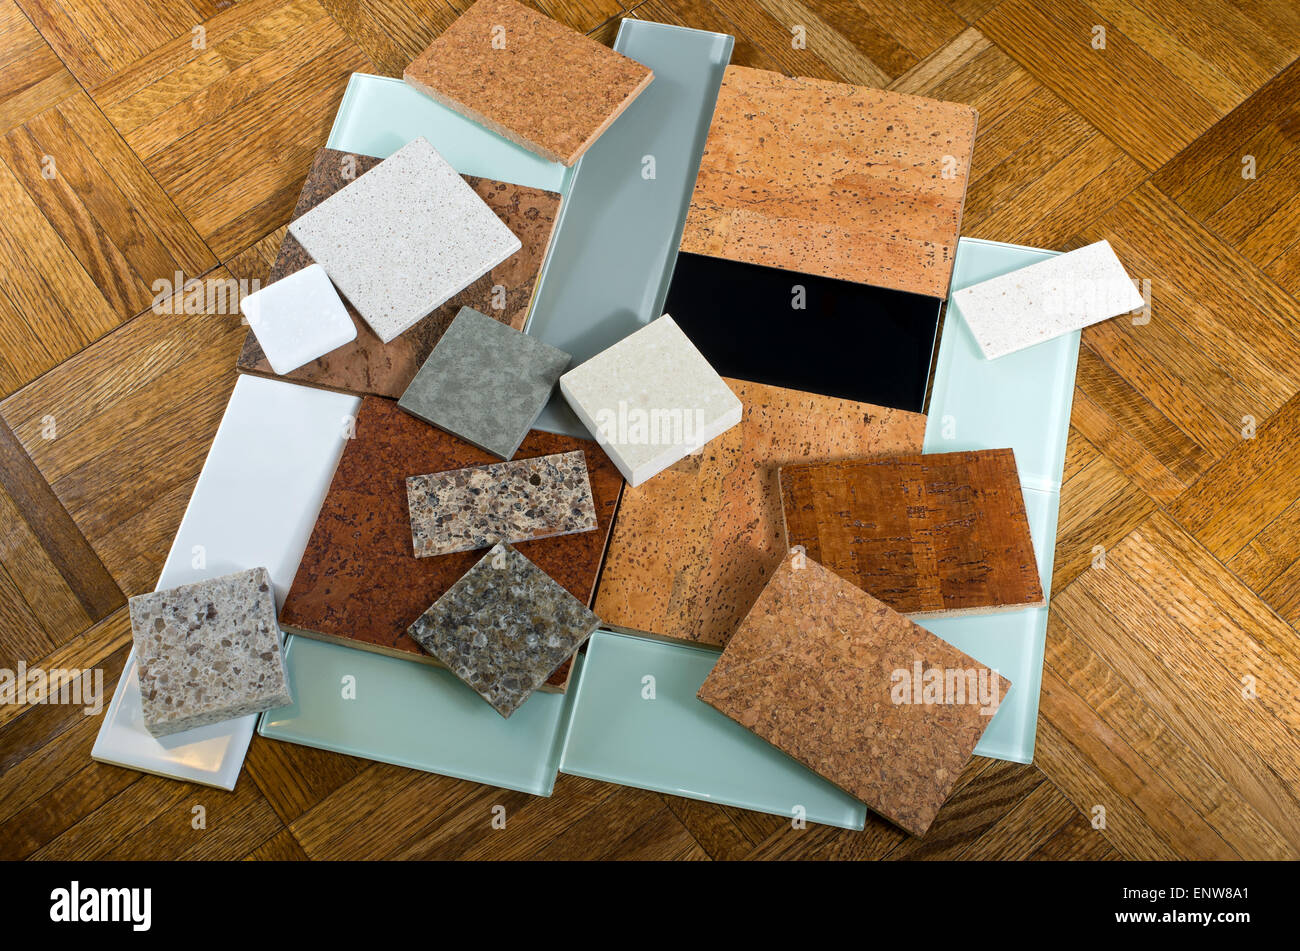 Glass Subway Tiles Quartz Countertop Samples Cork Pieces And Stock